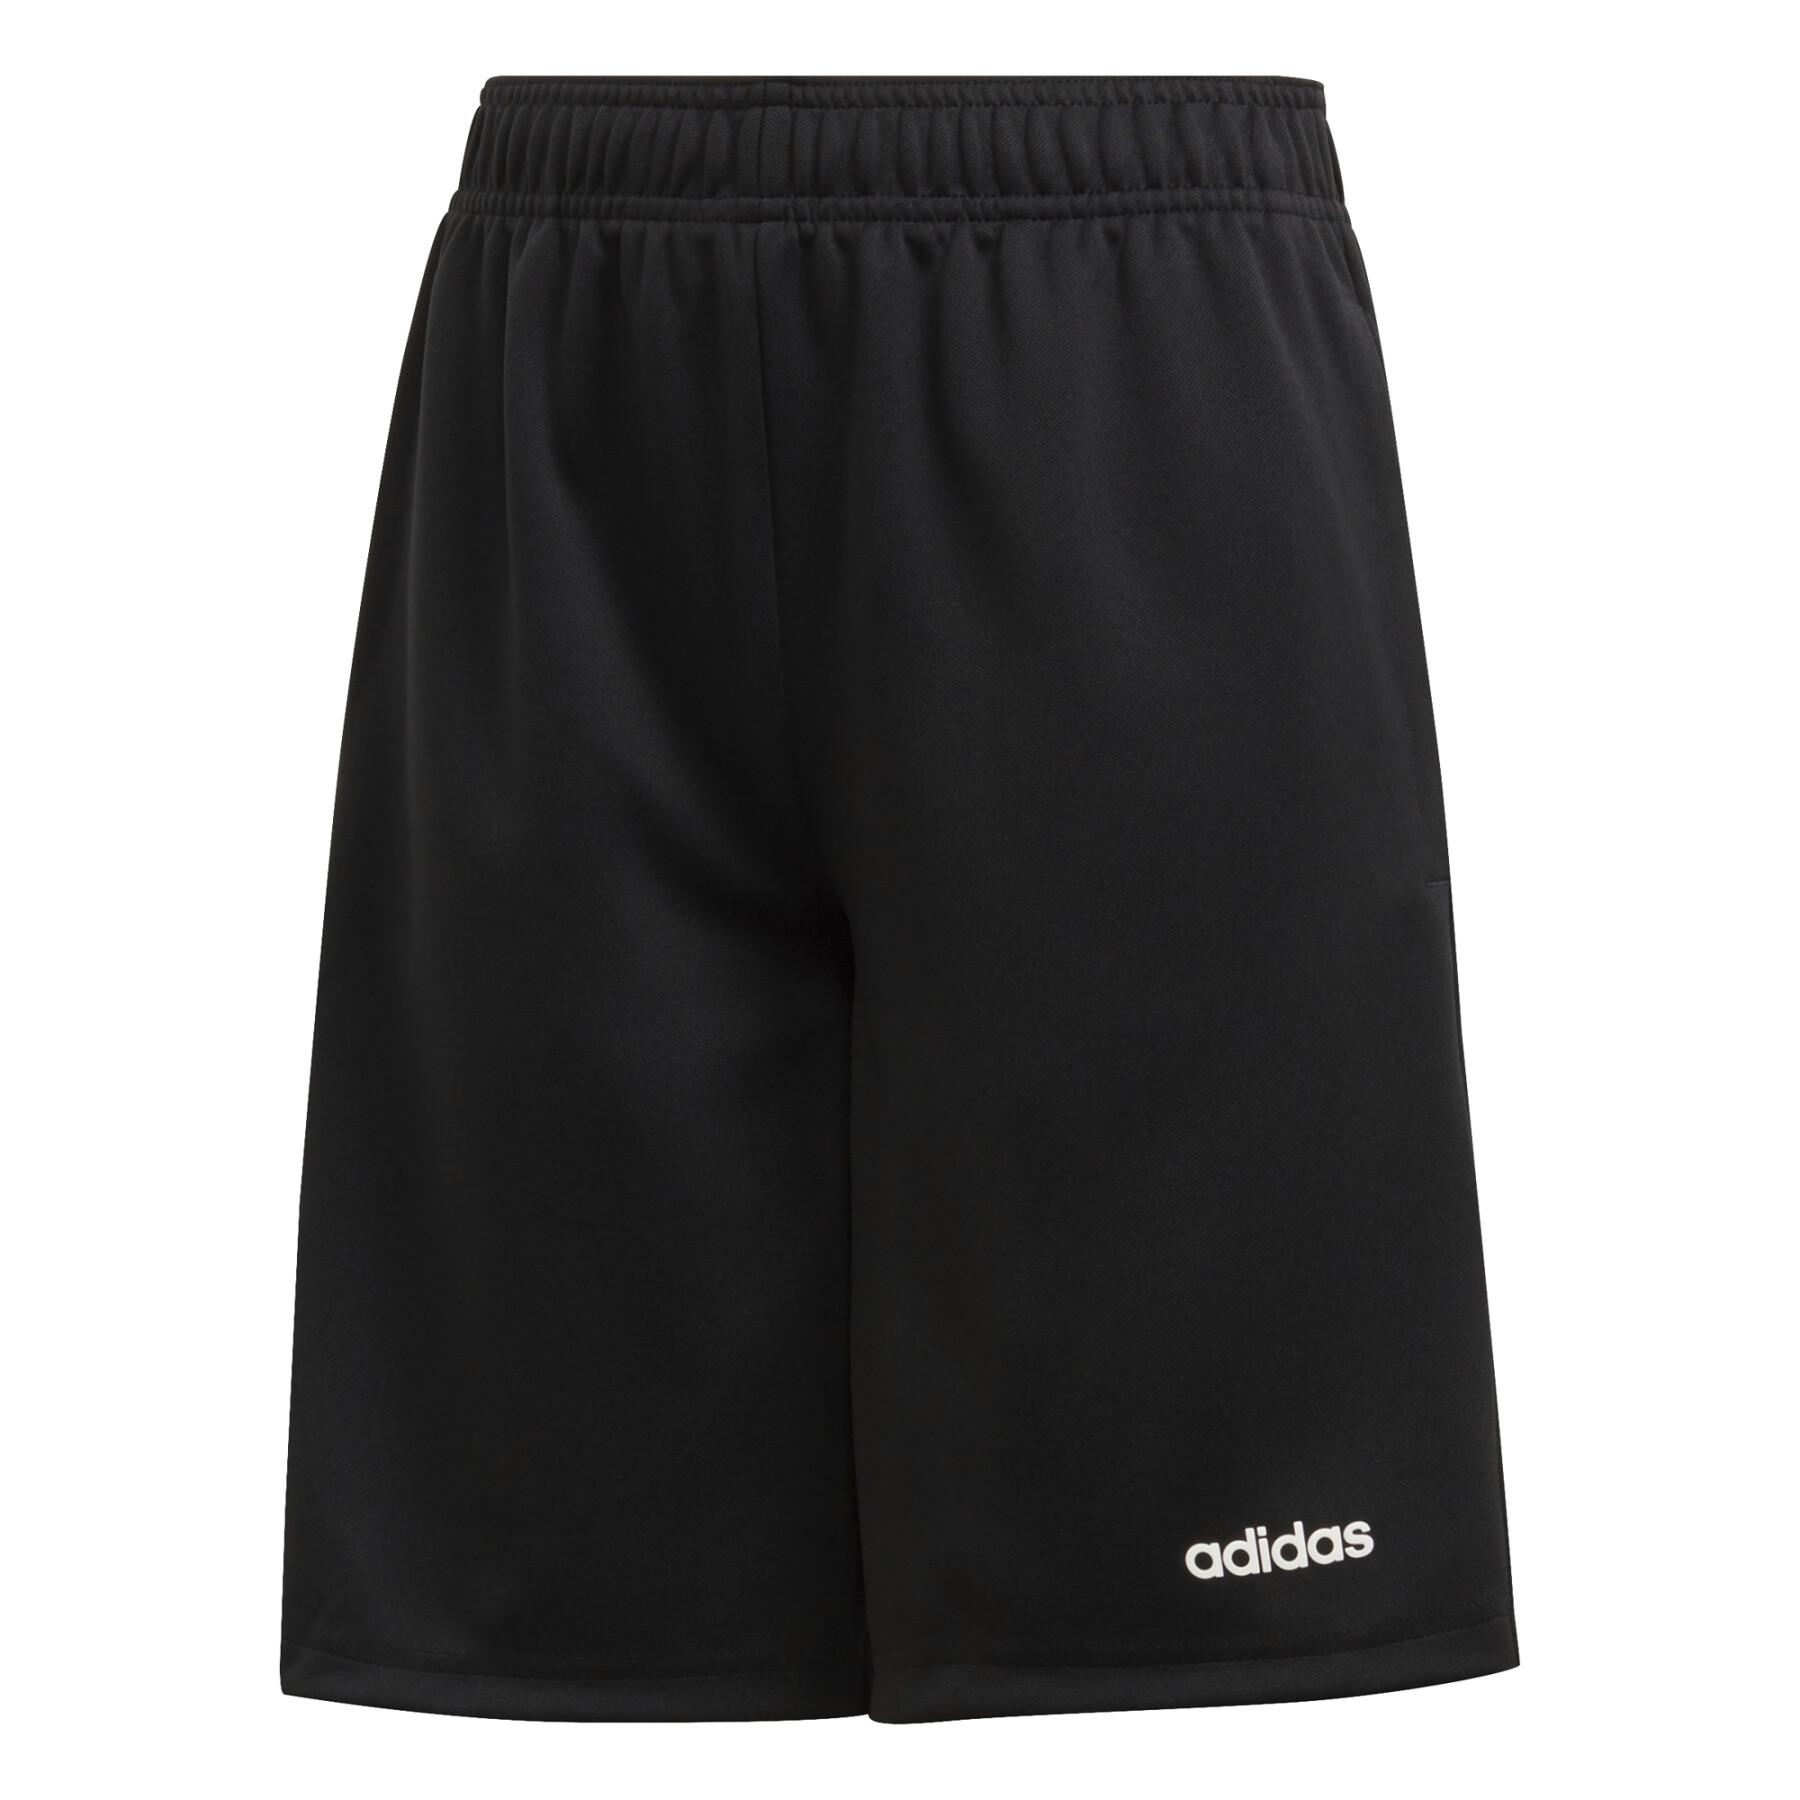 Kinder shorts adidas Linear Logo